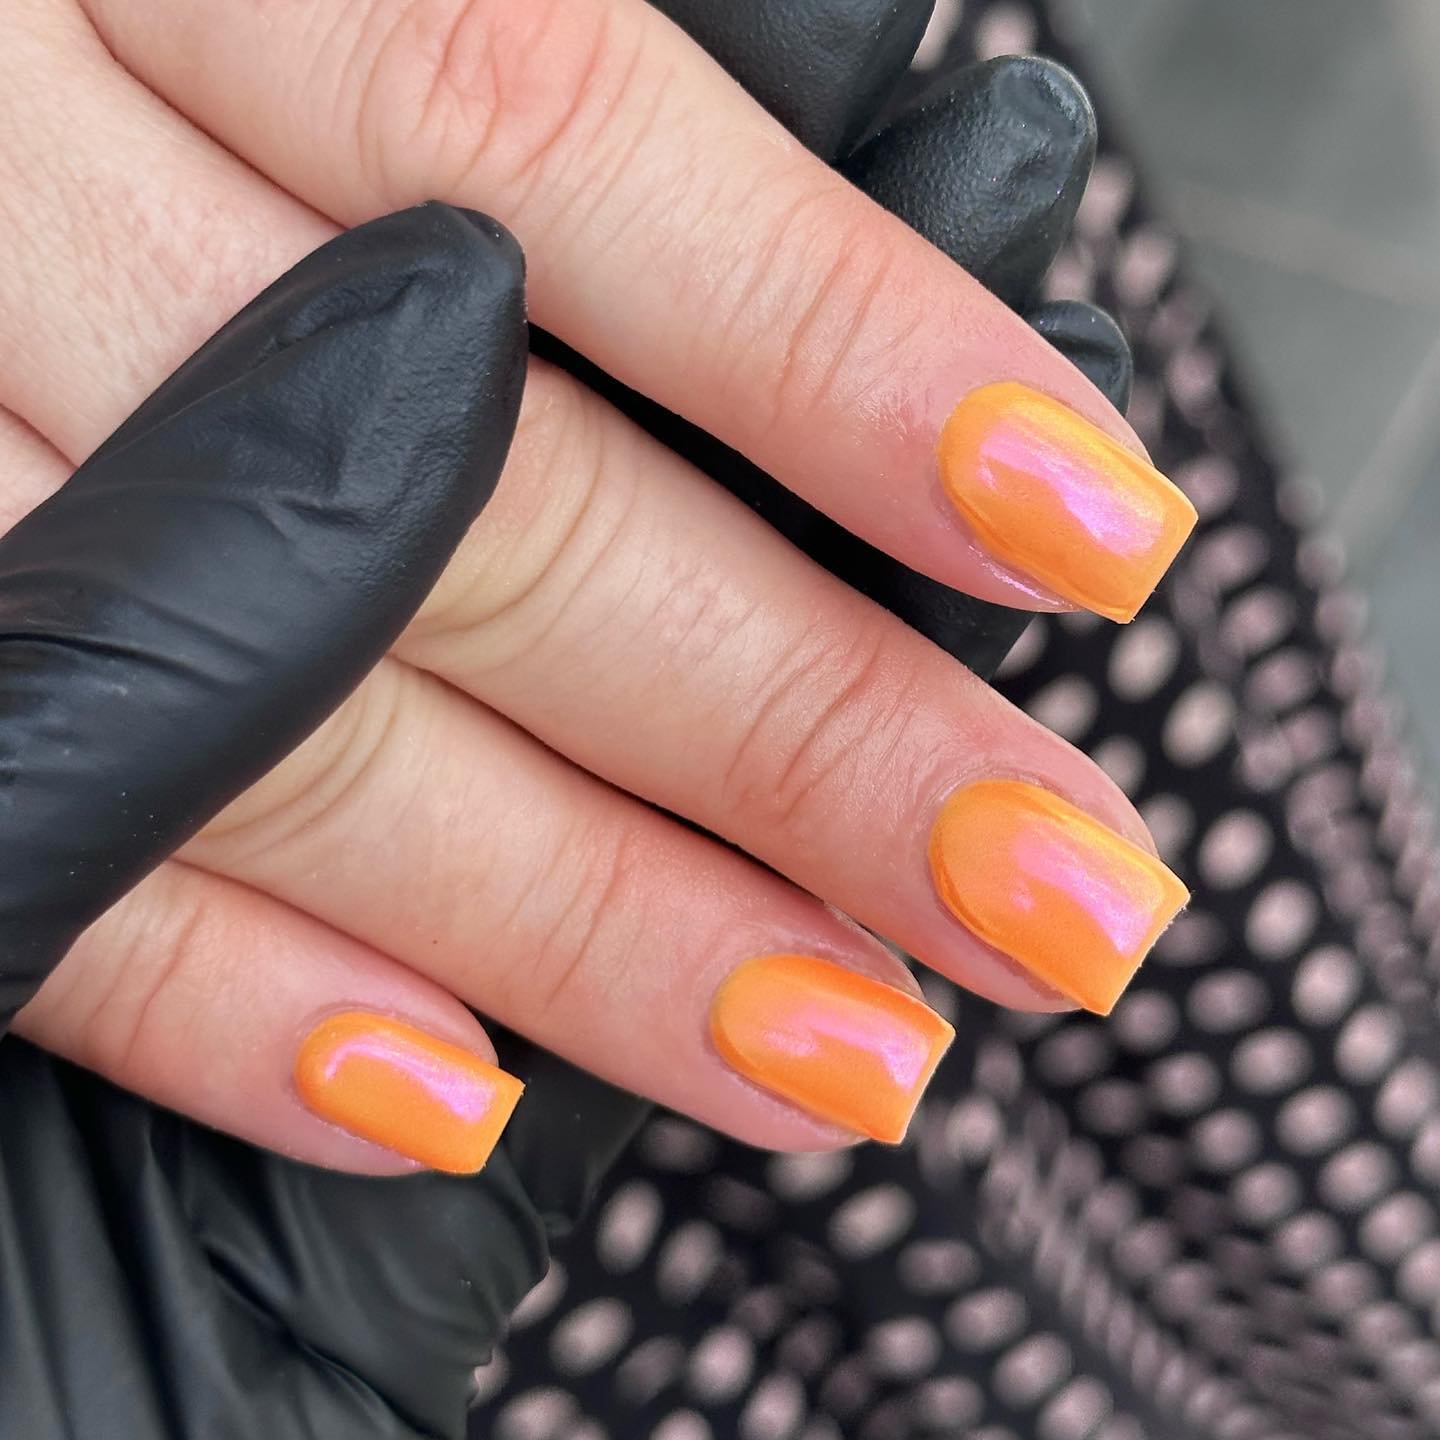 Orange chrome🧡

Using the @the_gelbottle_inc Bellini and @essenceglitter pixi chrome 

#chromenails #orangenails #nails #orangechromenails #nailart #naildesign #nailsnailsnails #naildesigns #nailtech #gelbottle #thegelbottleinc #lichfield